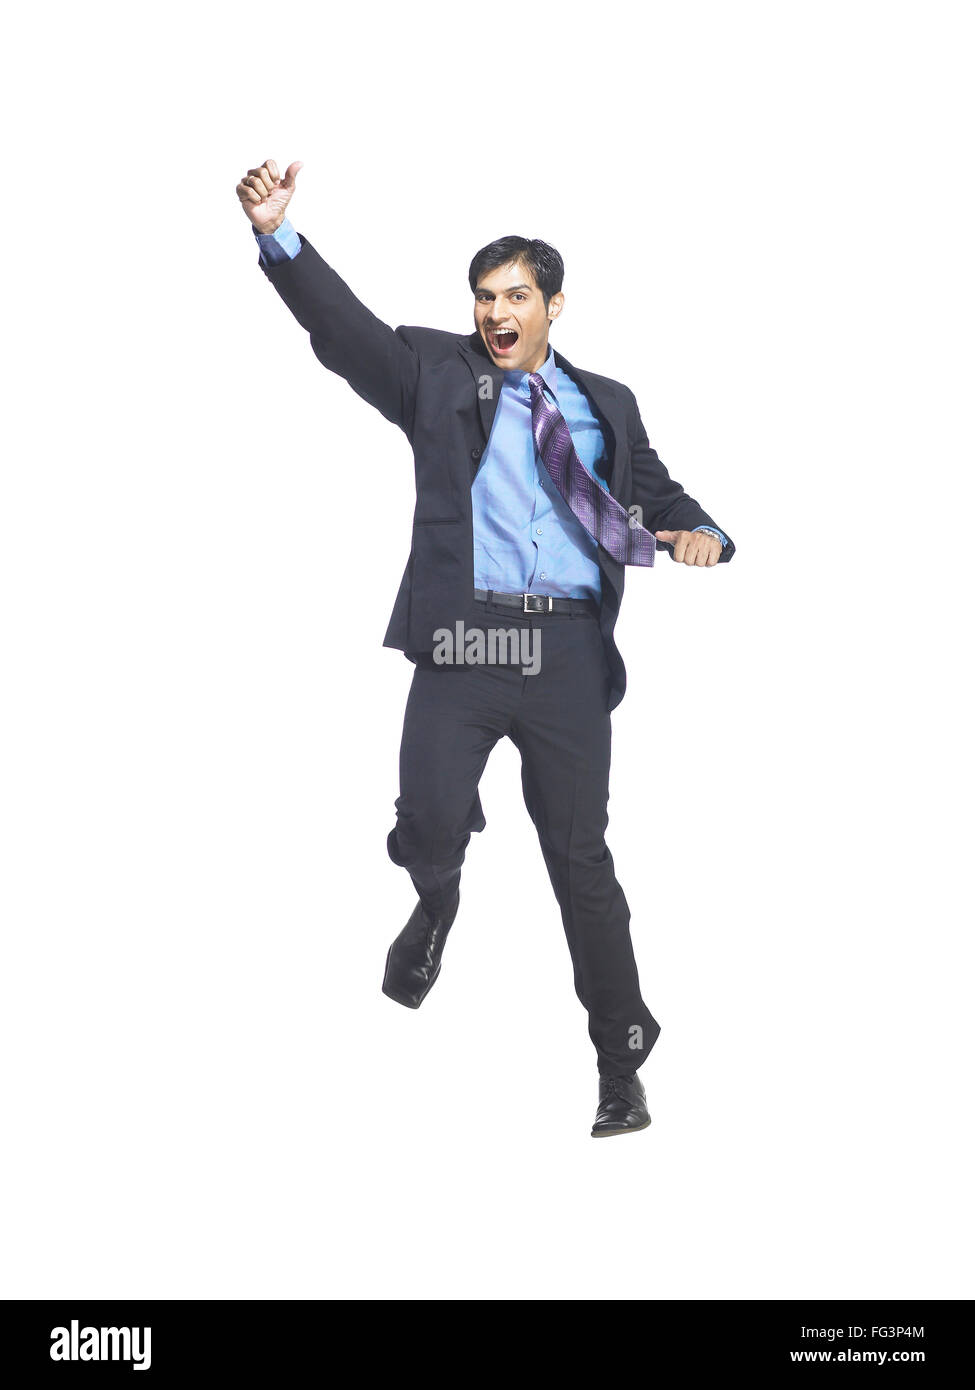 South Asian Indian executive man jumping with joy MR Stock Photo